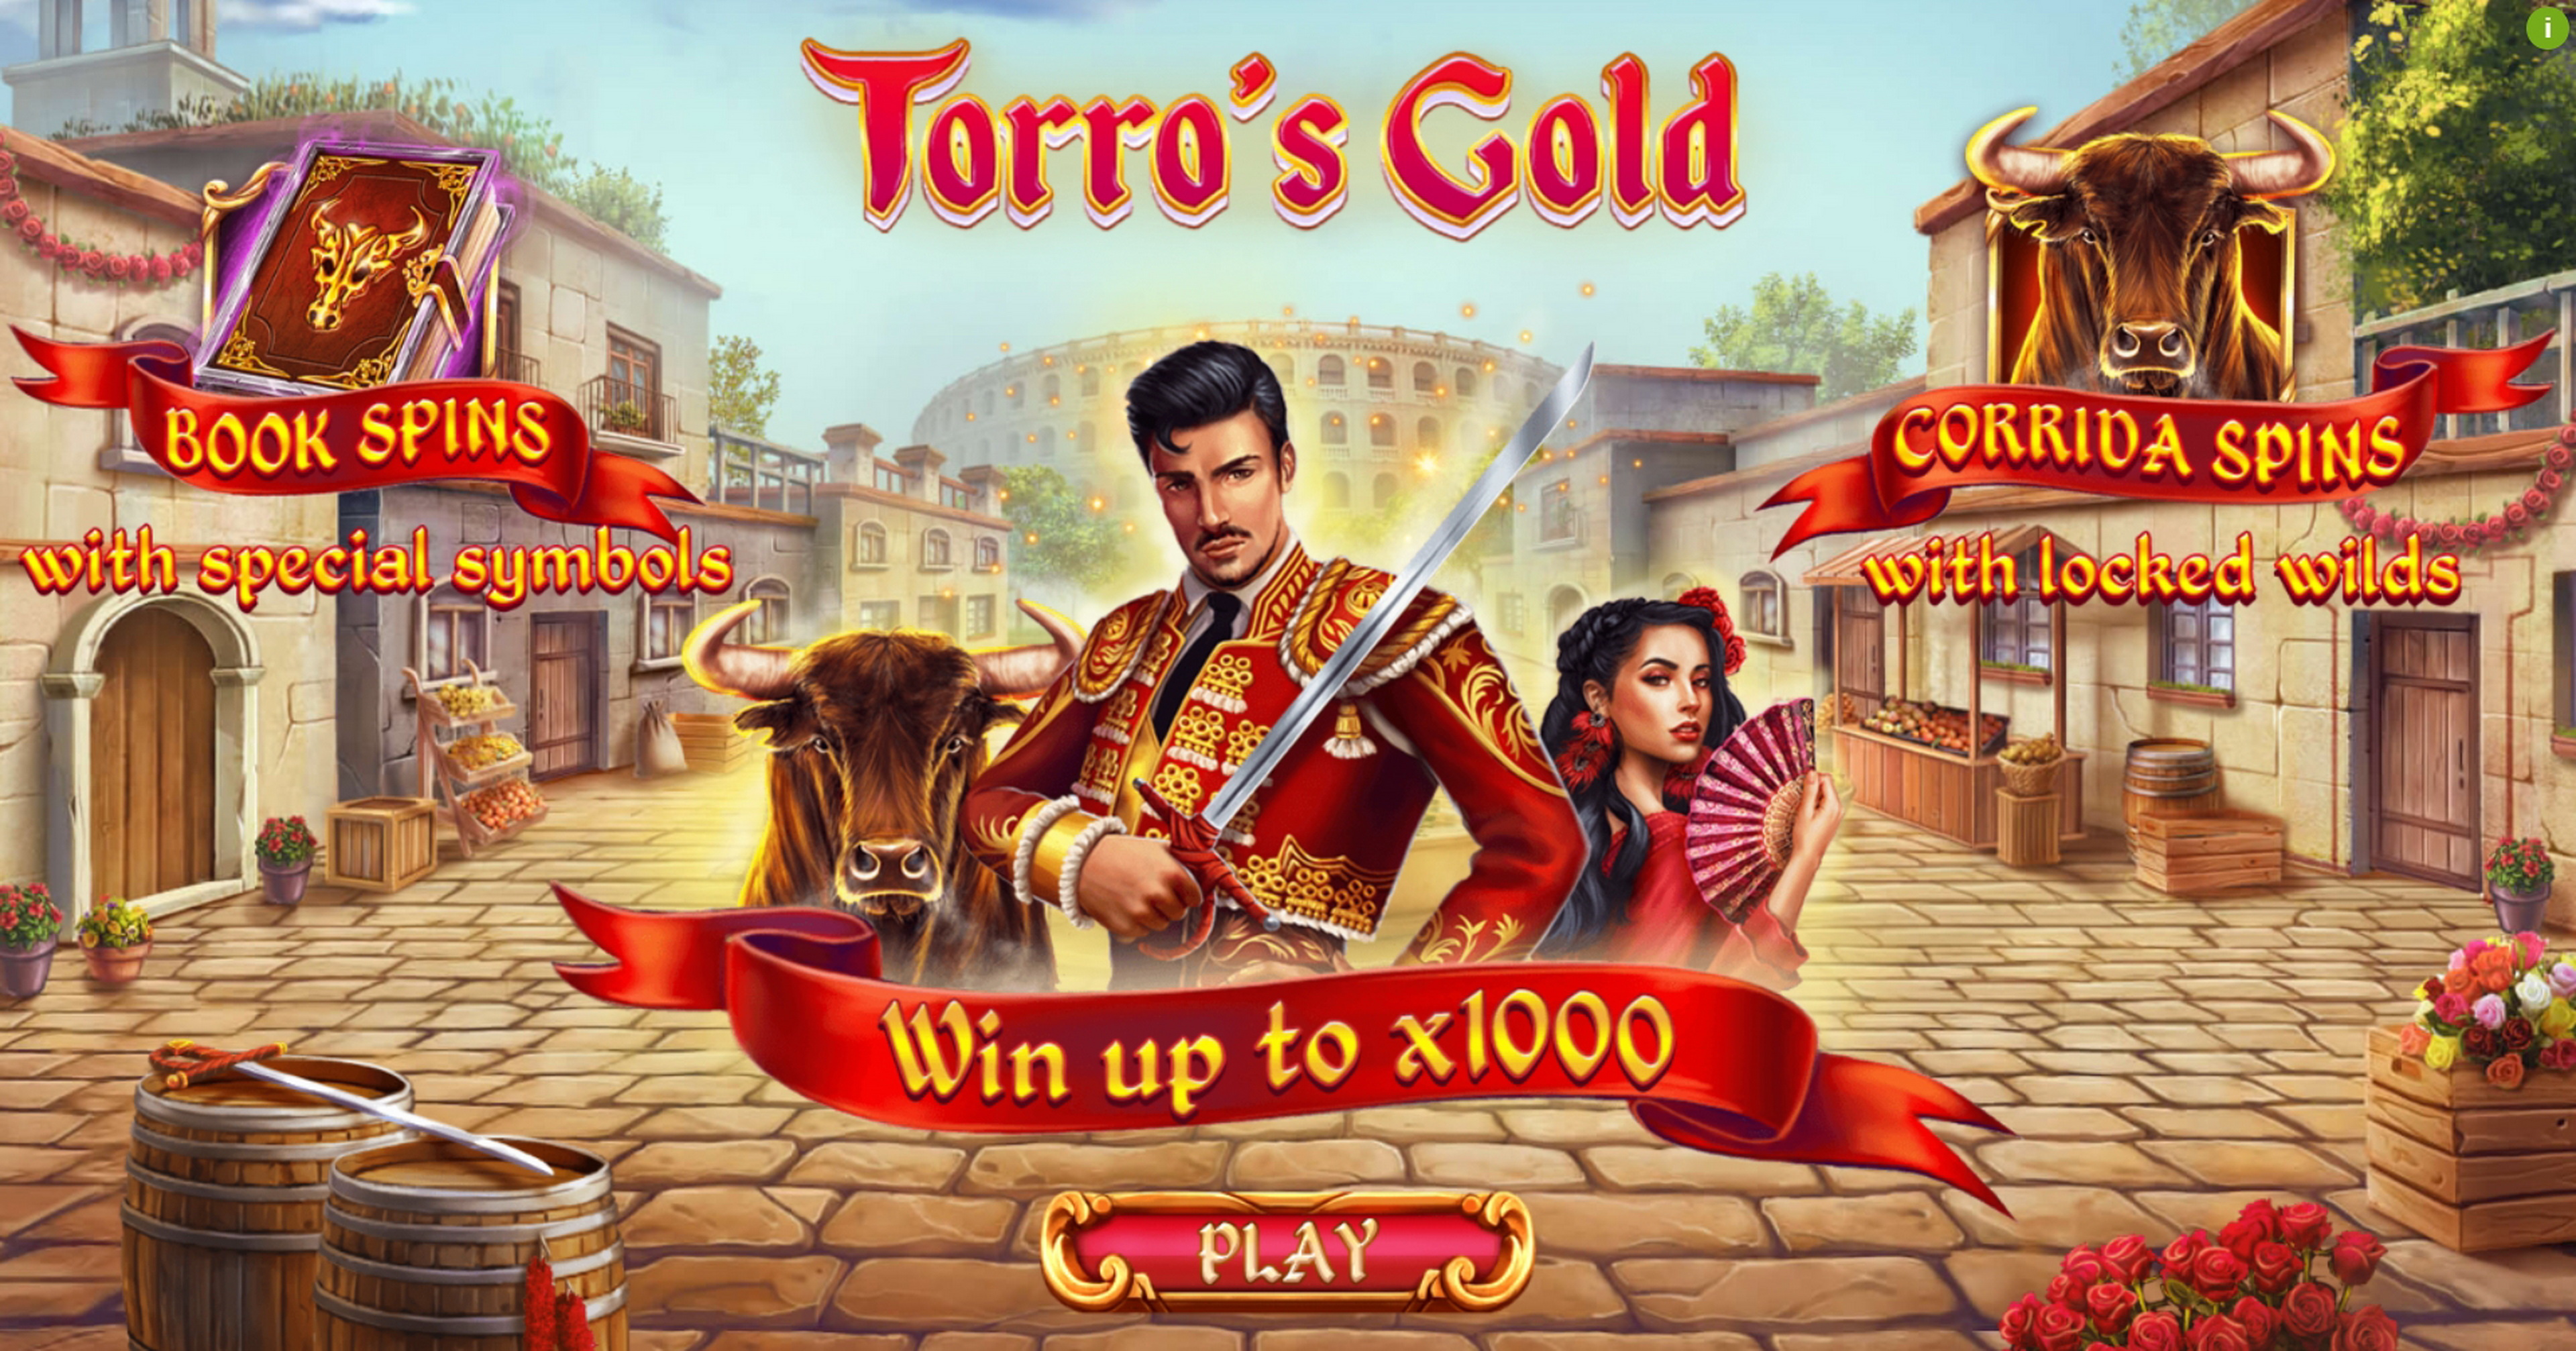 Play Torro's Gold Free Casino Slot Game by PariPlay